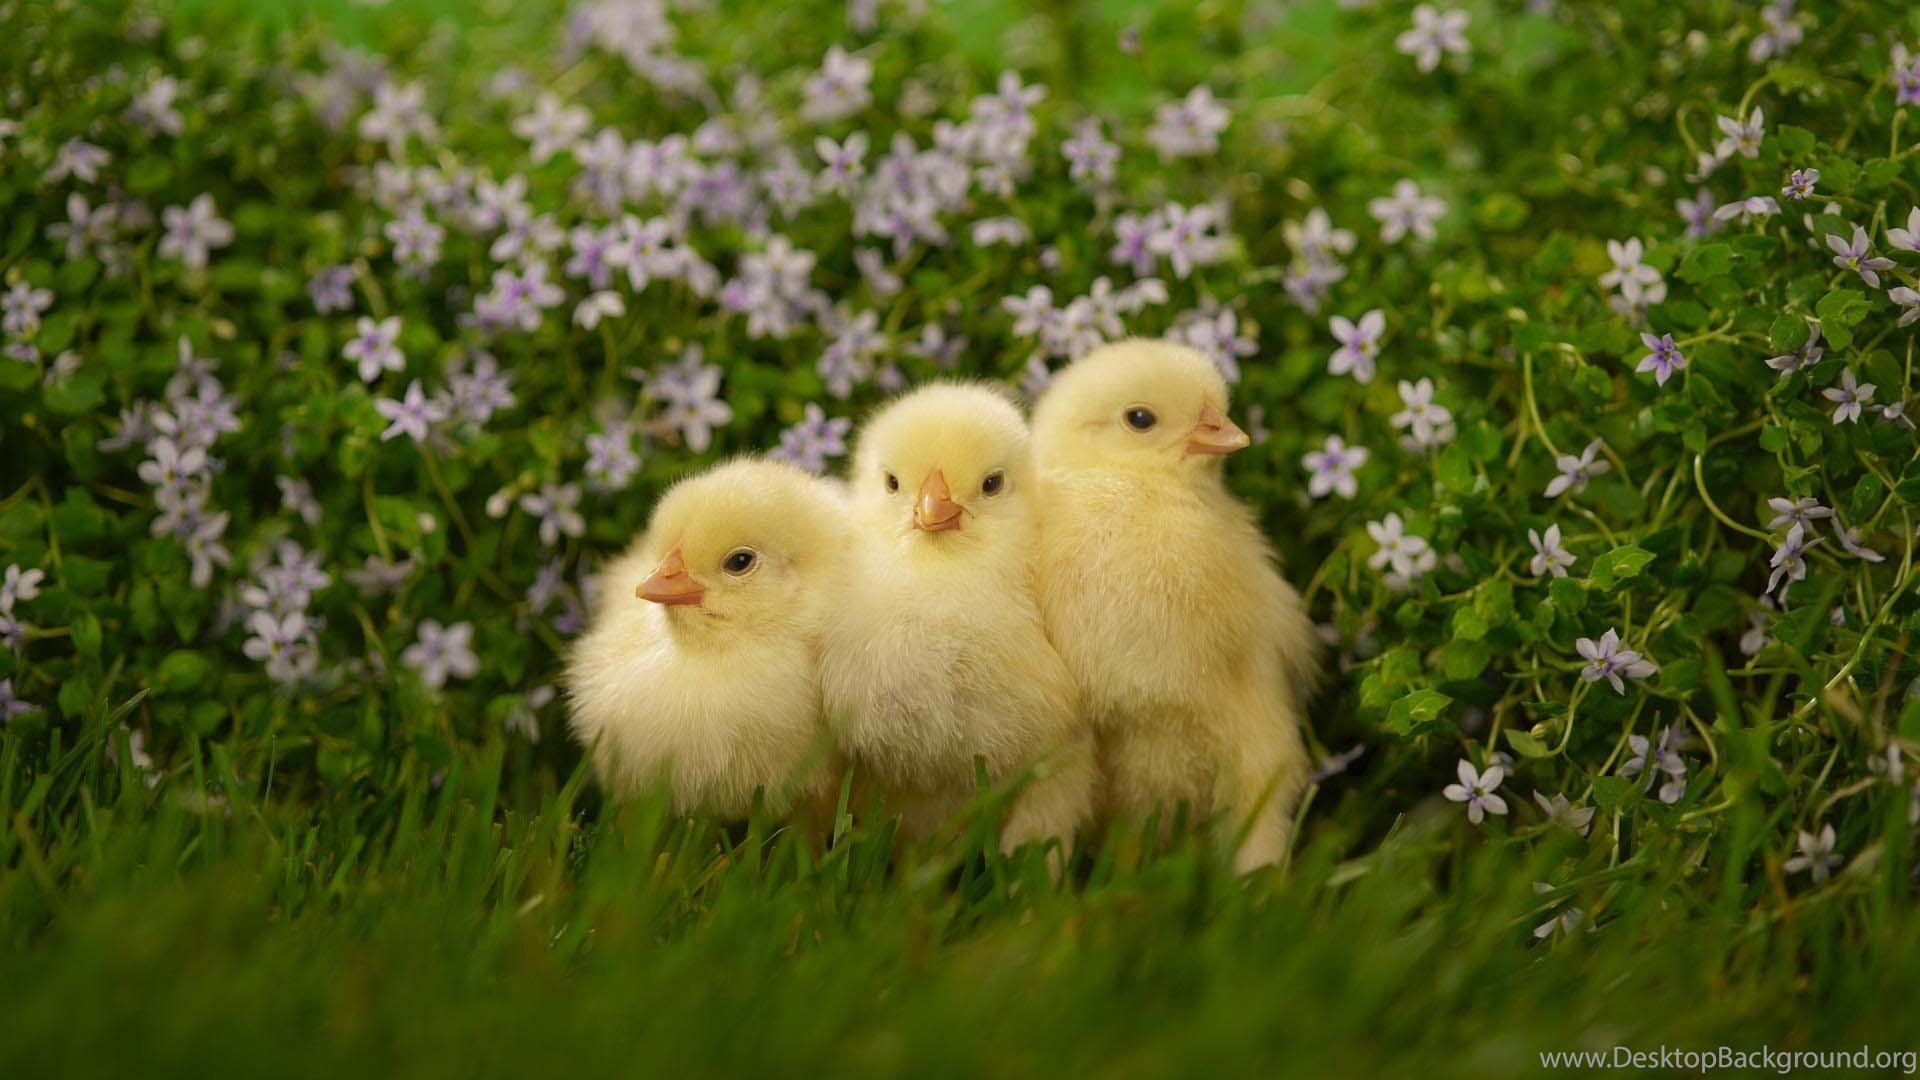 Baby Chicks Cute Wallpaper HD Download Of Cute Birds Desktop Background